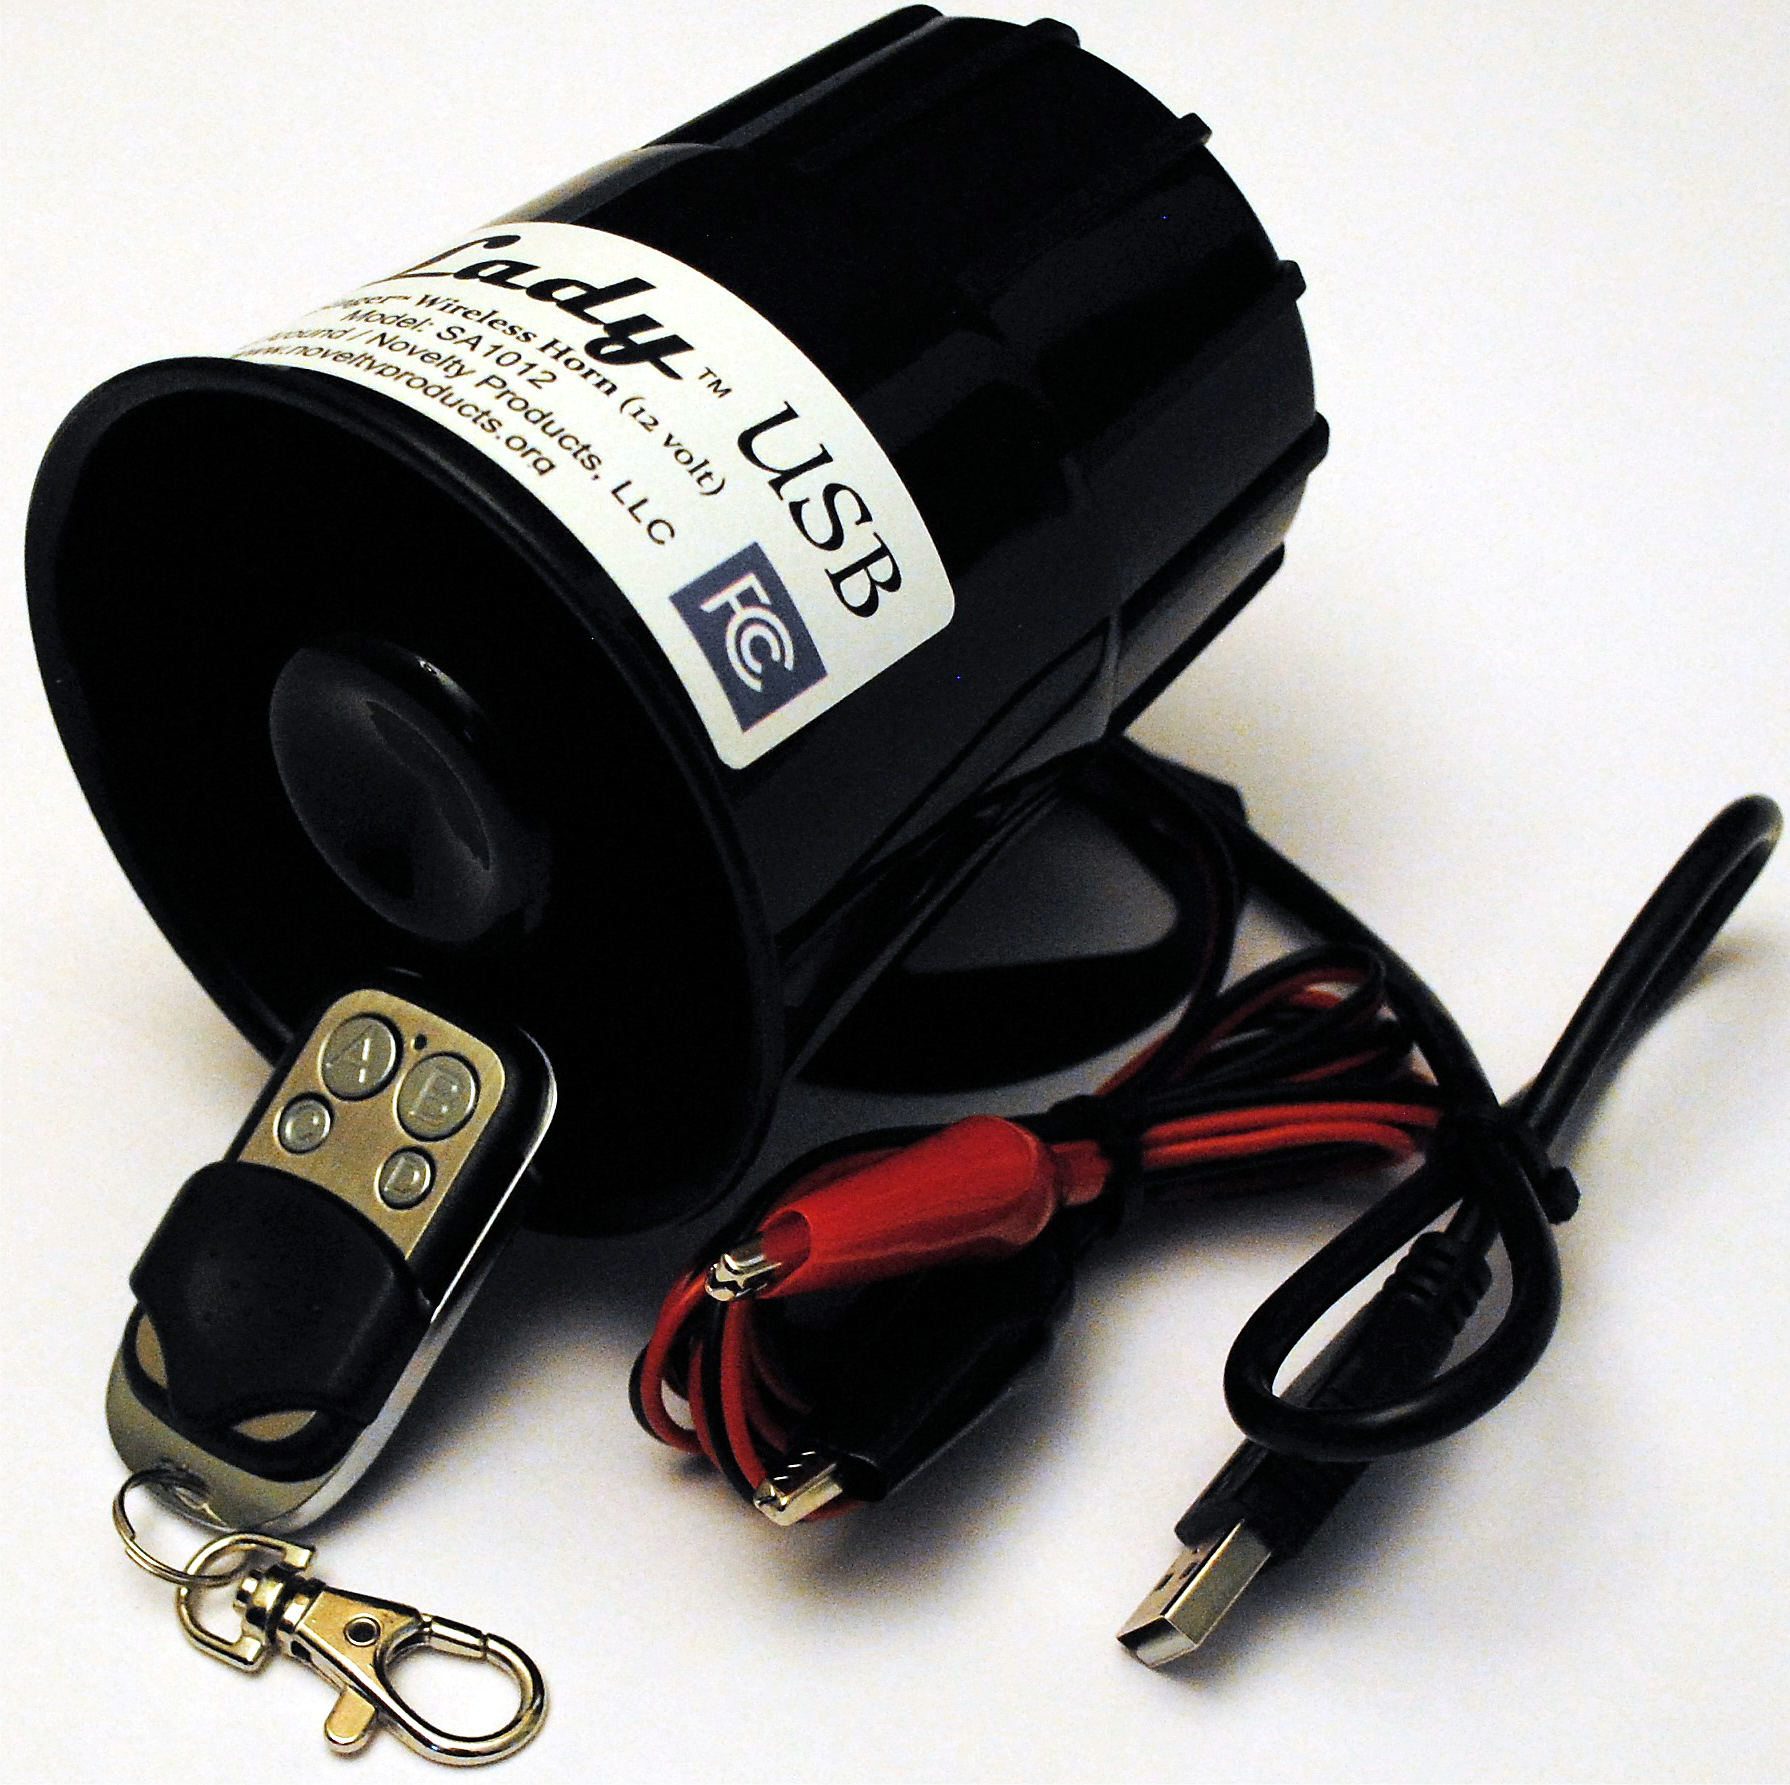 University of Texas UT Longhorns USB Car Horn with Wireless KeyFOB Remote